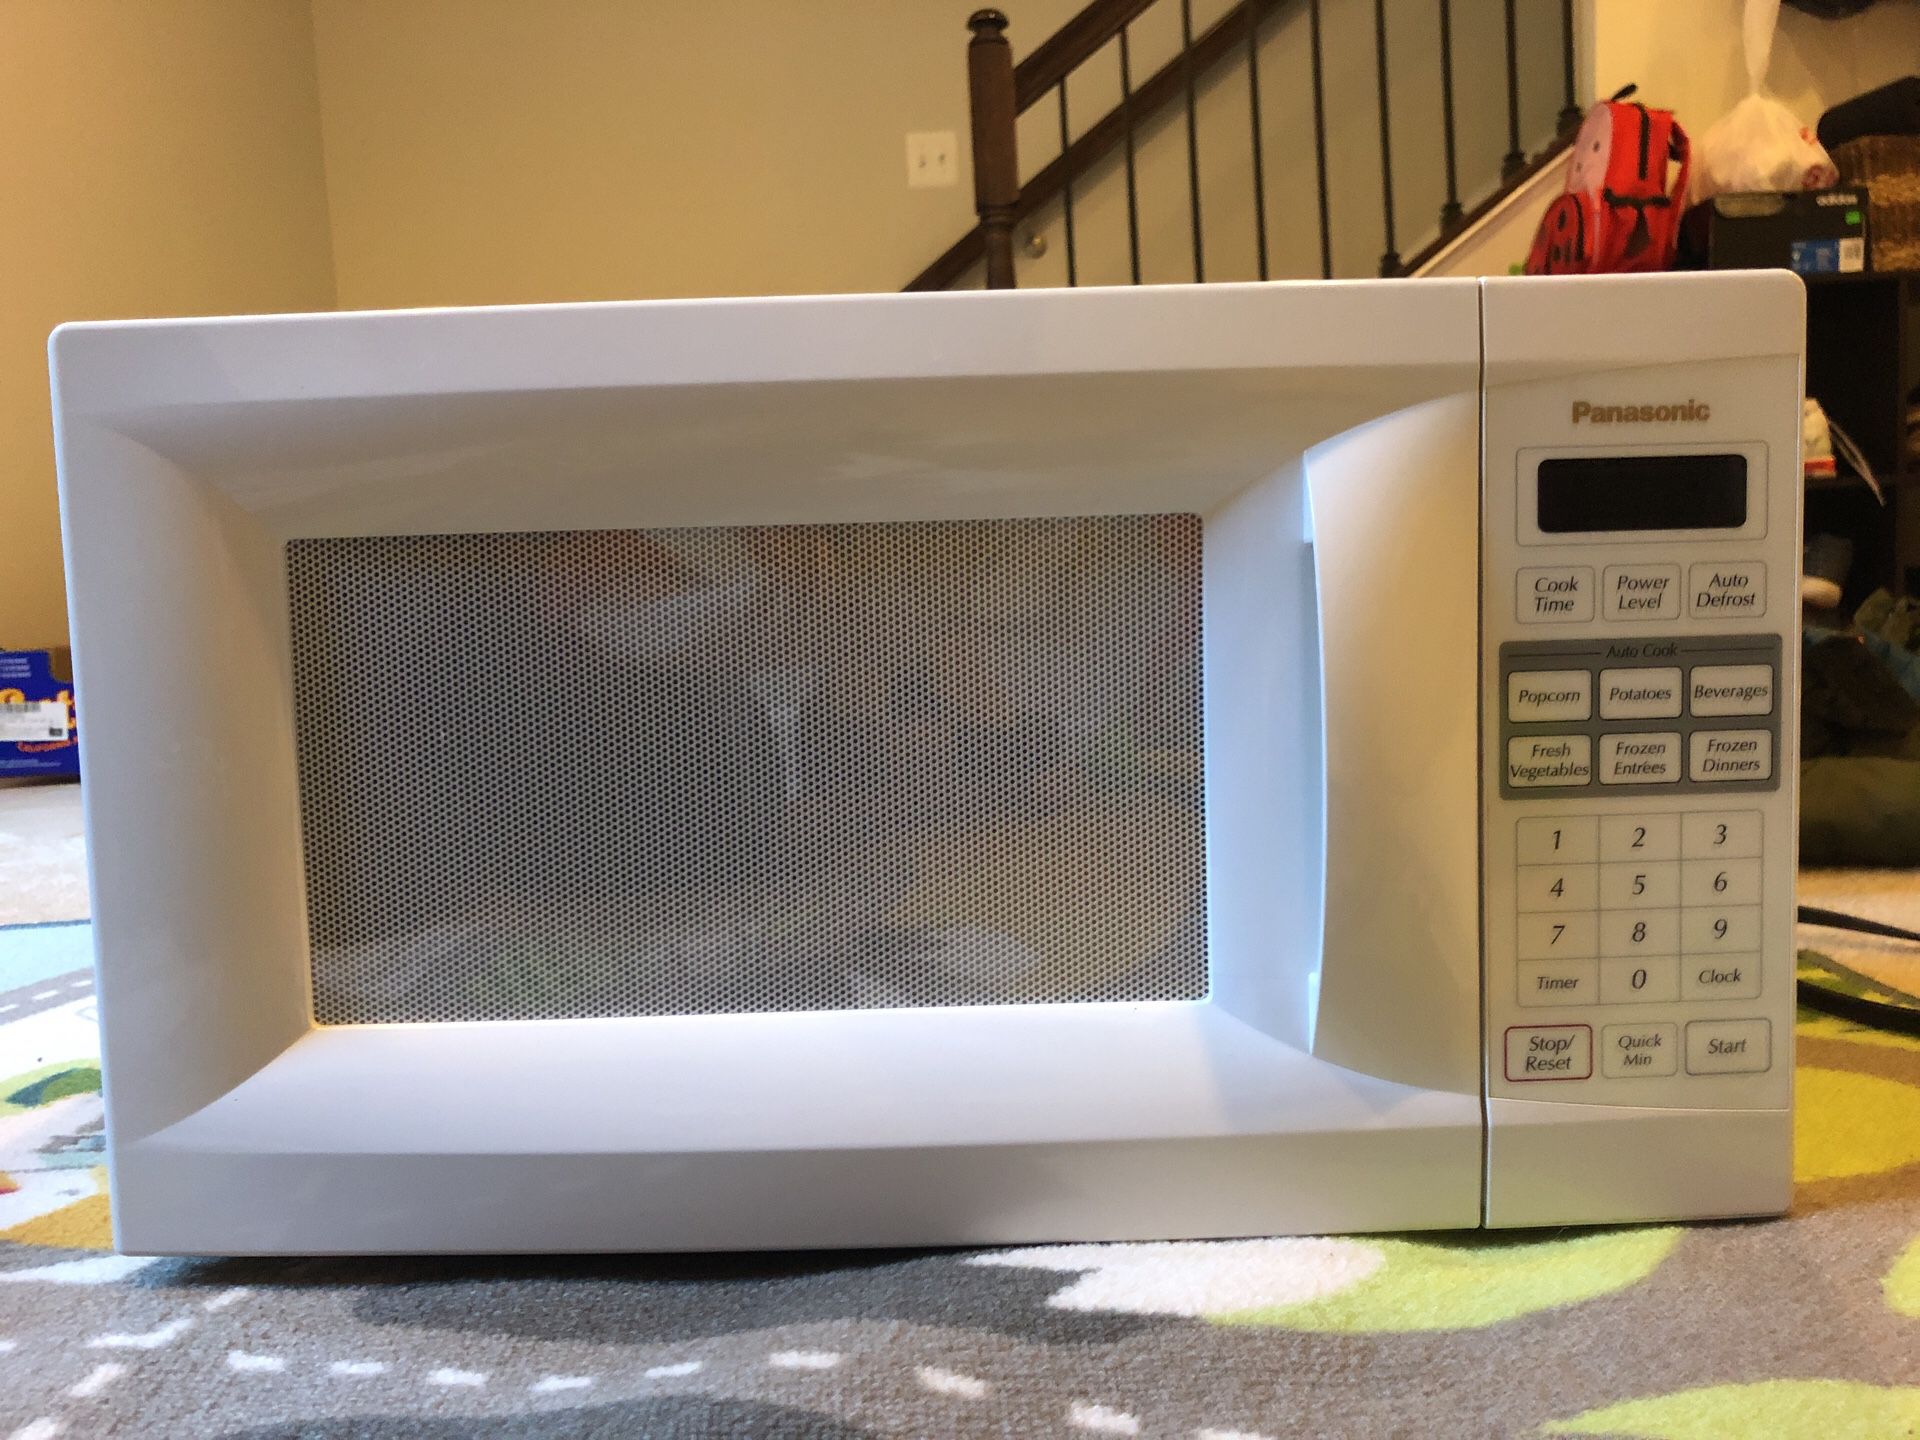 Panasonic microwave- new condition